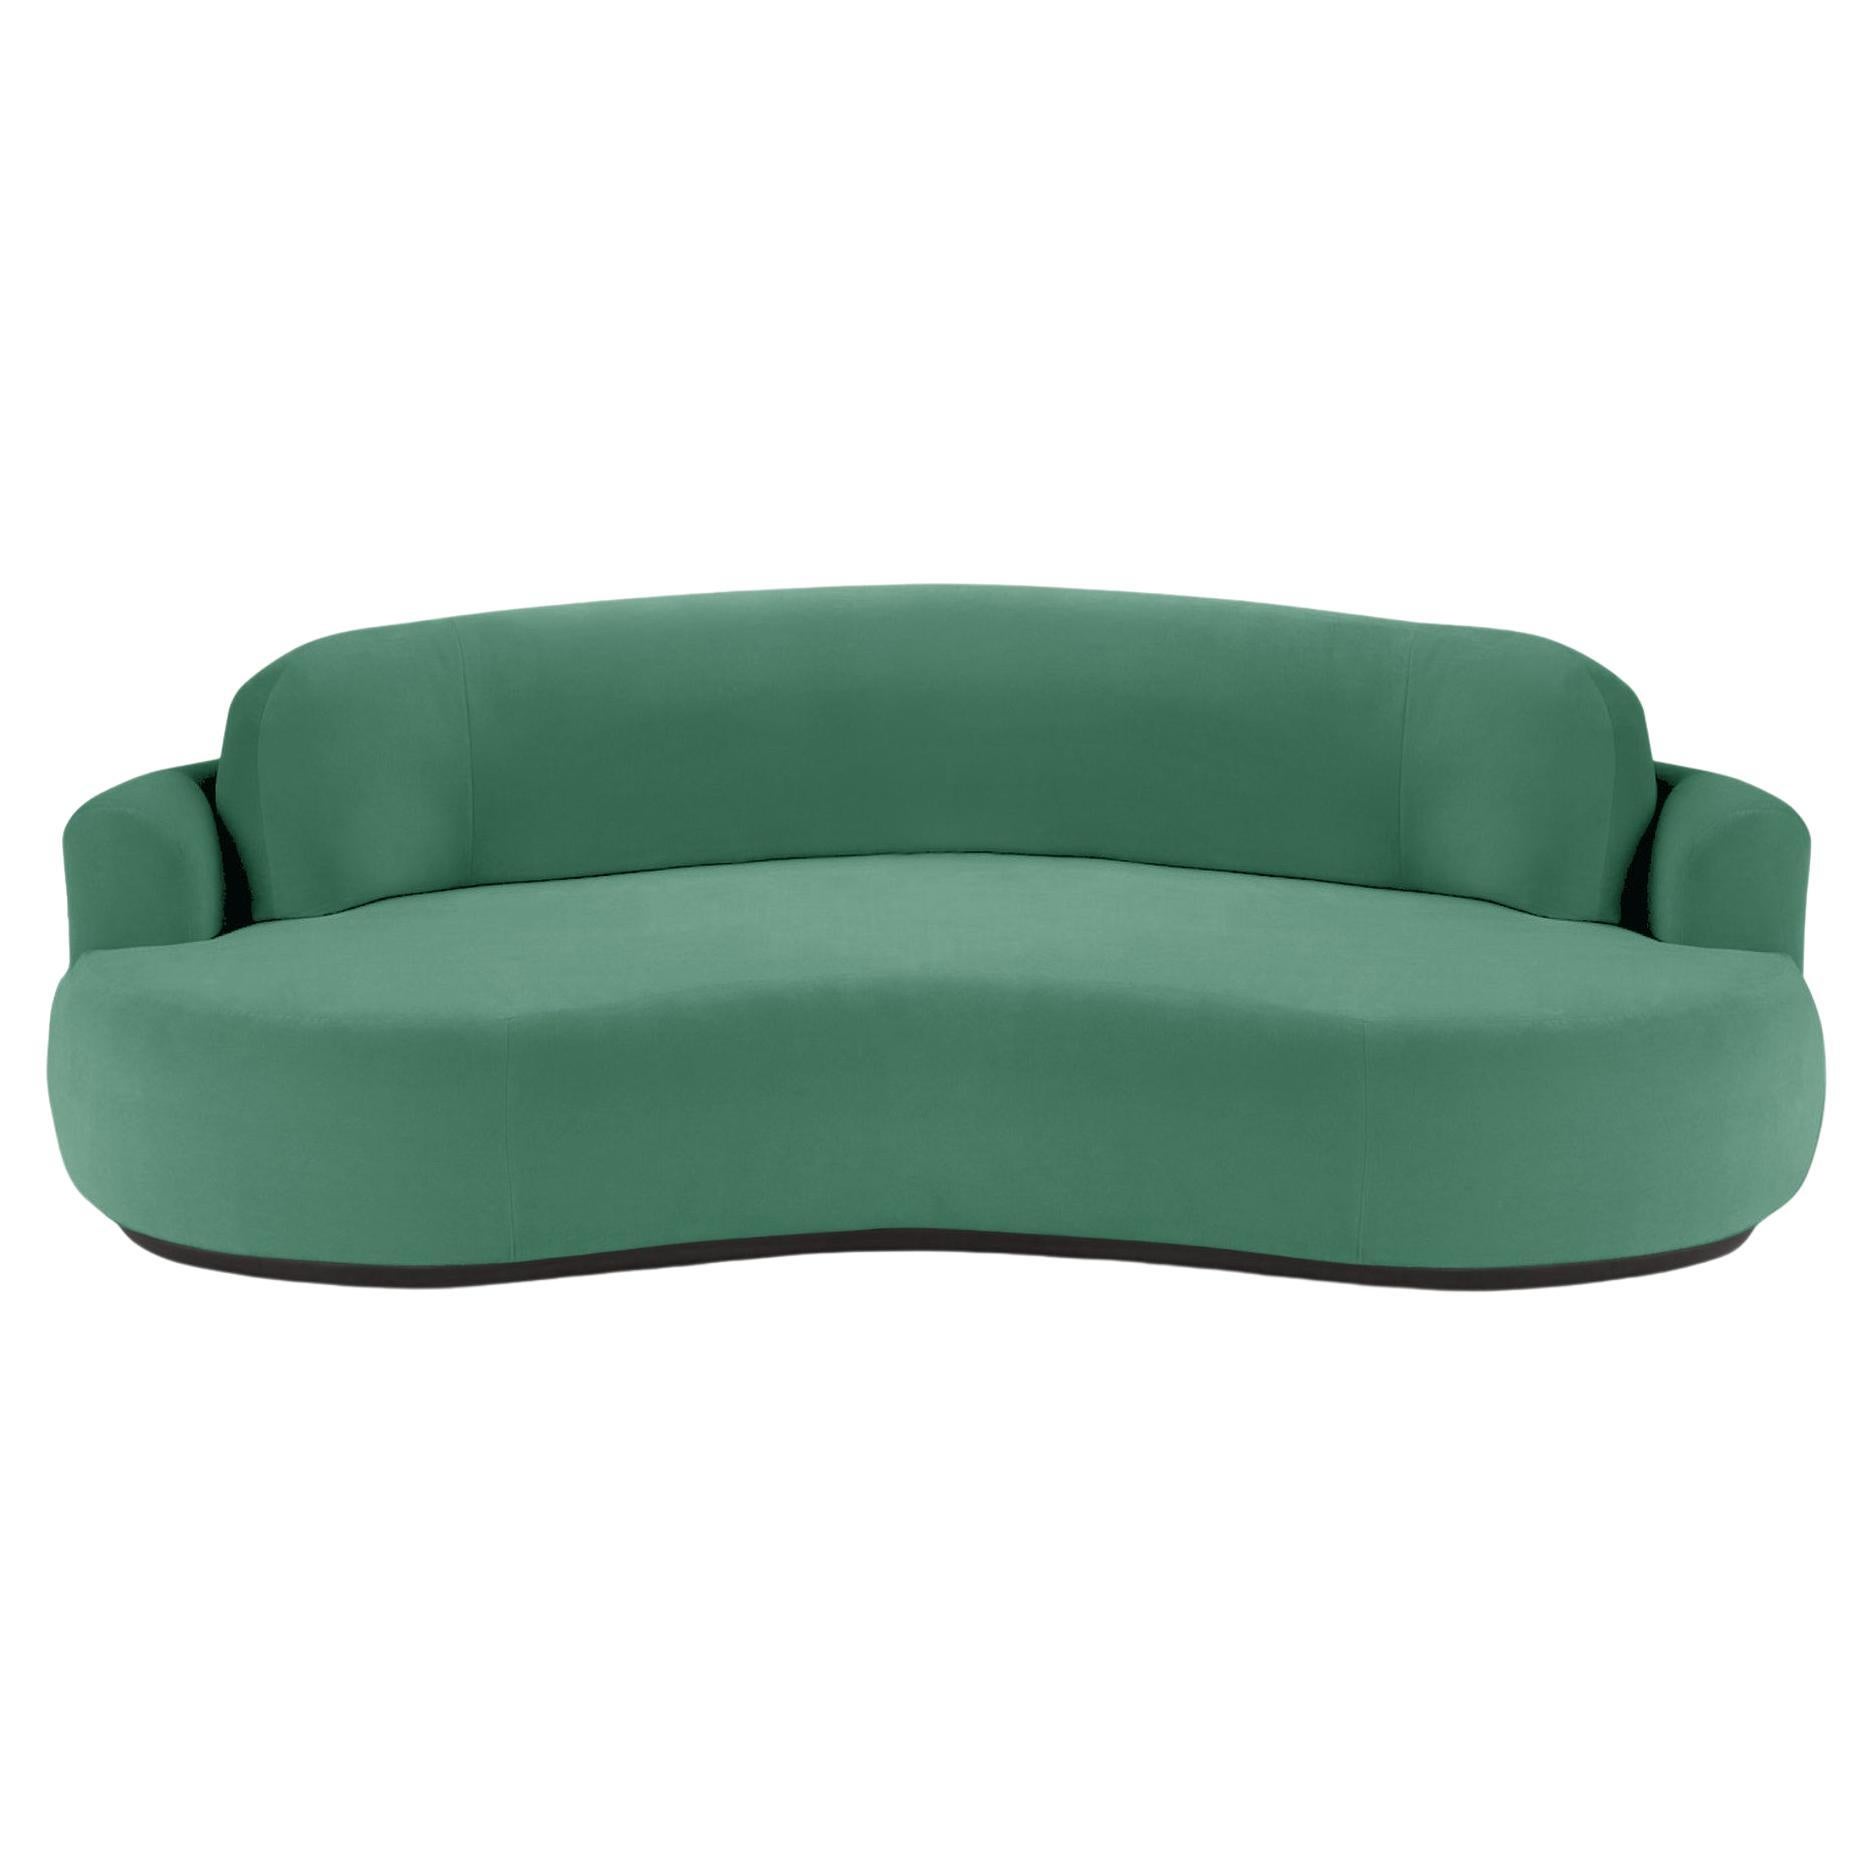 Naked Round Sofa, Medium with Beech Ash-056-5 and Paris Green